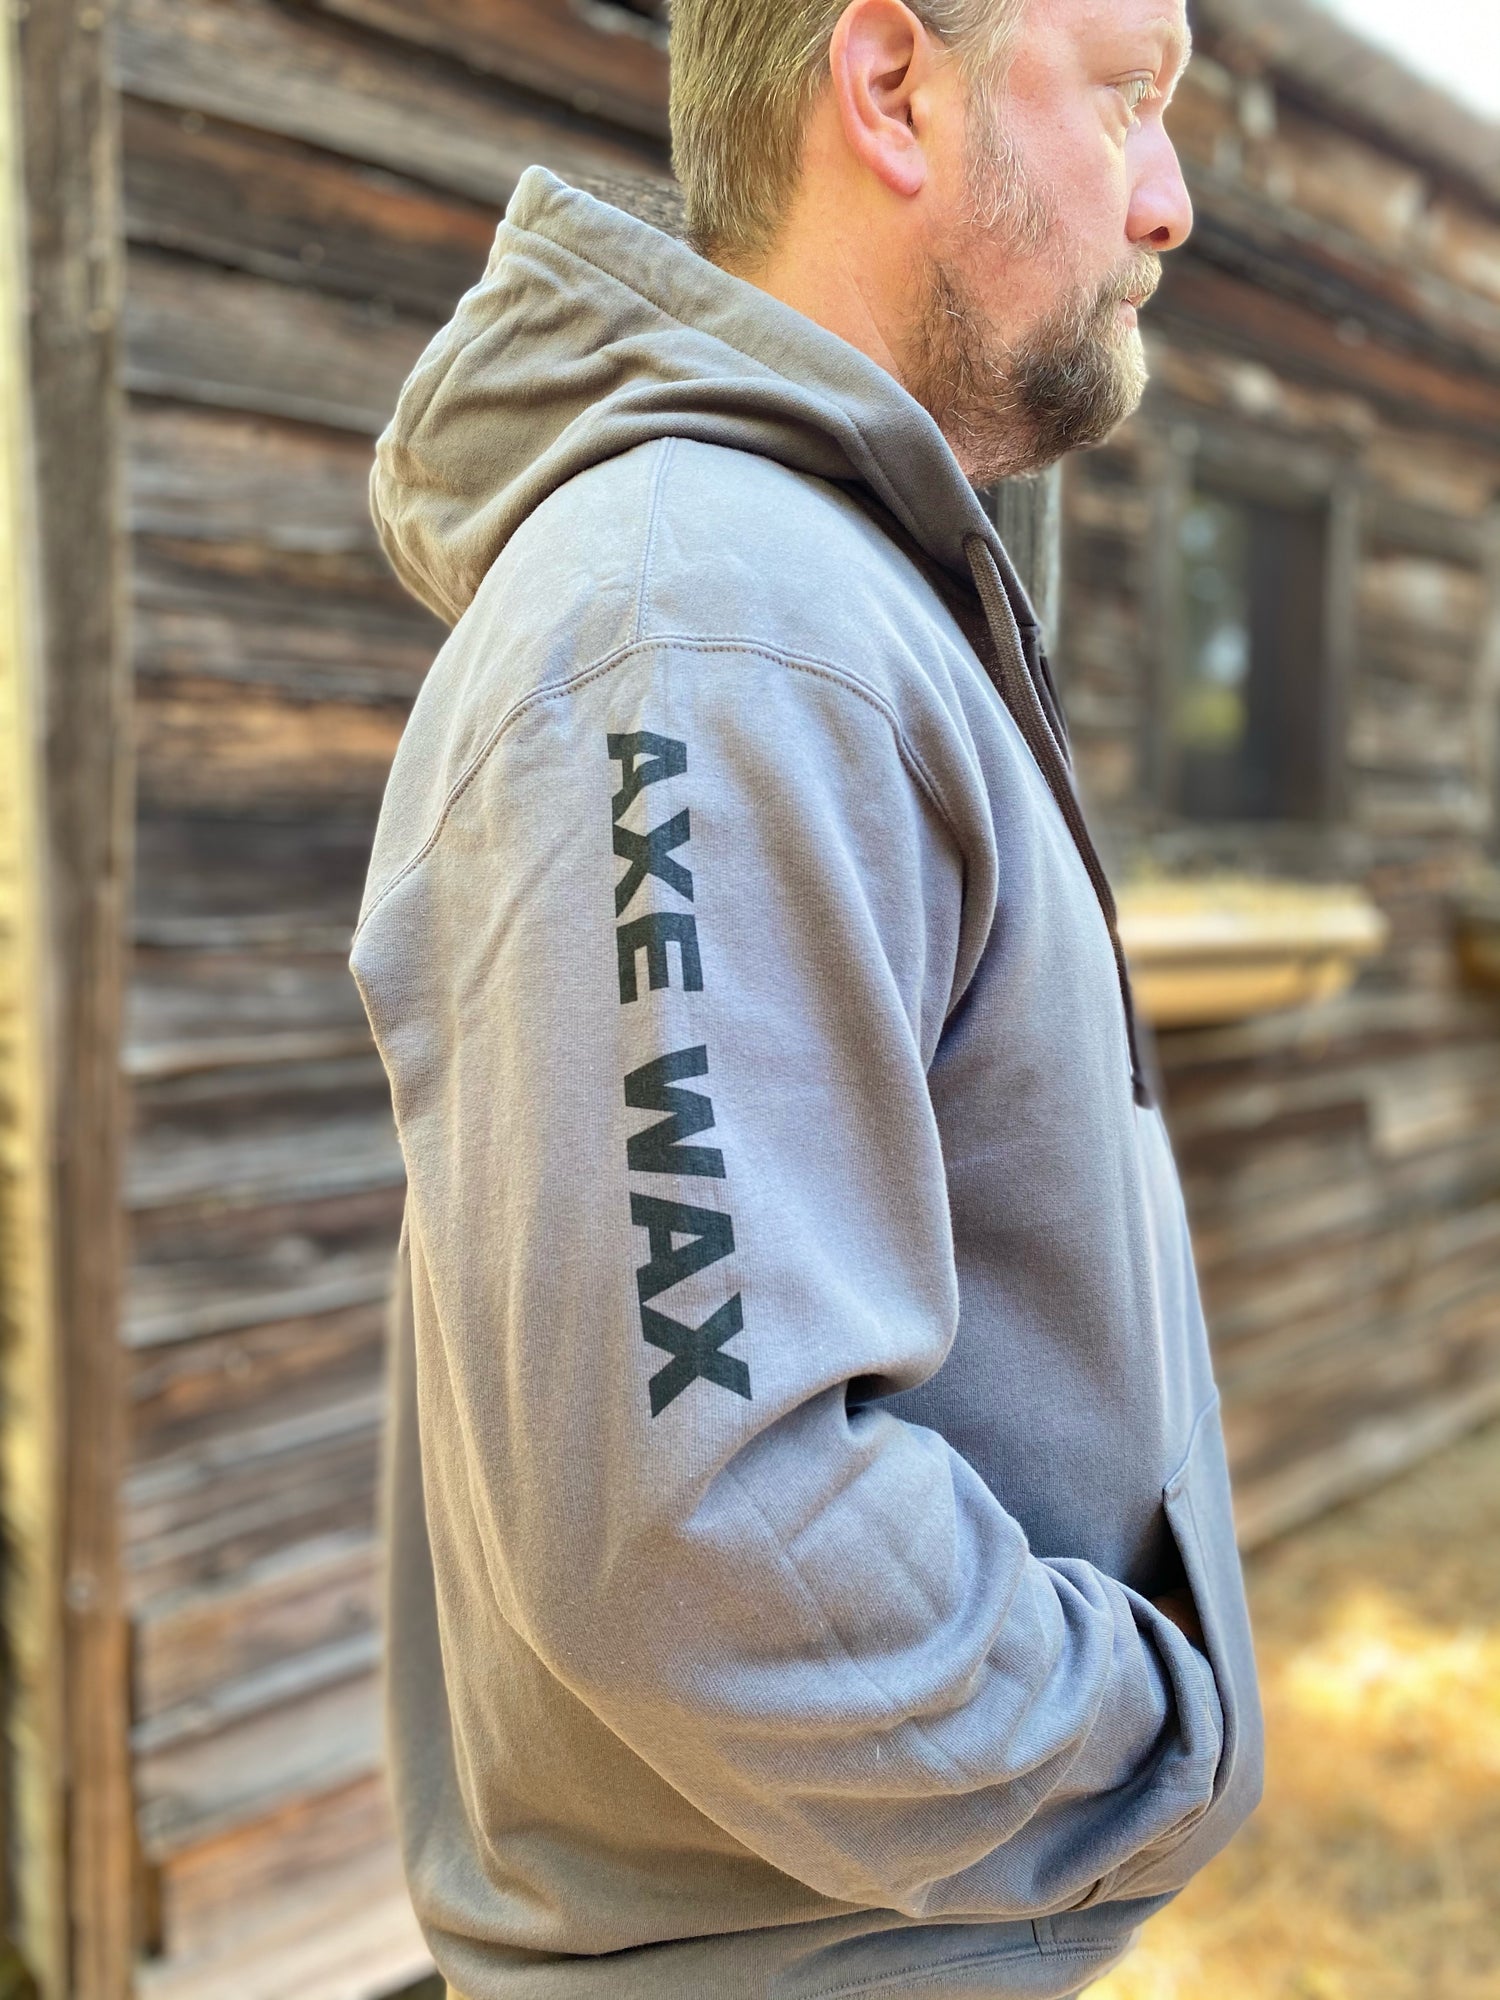 Axe Wax Logo T-shirt Men's - Silver